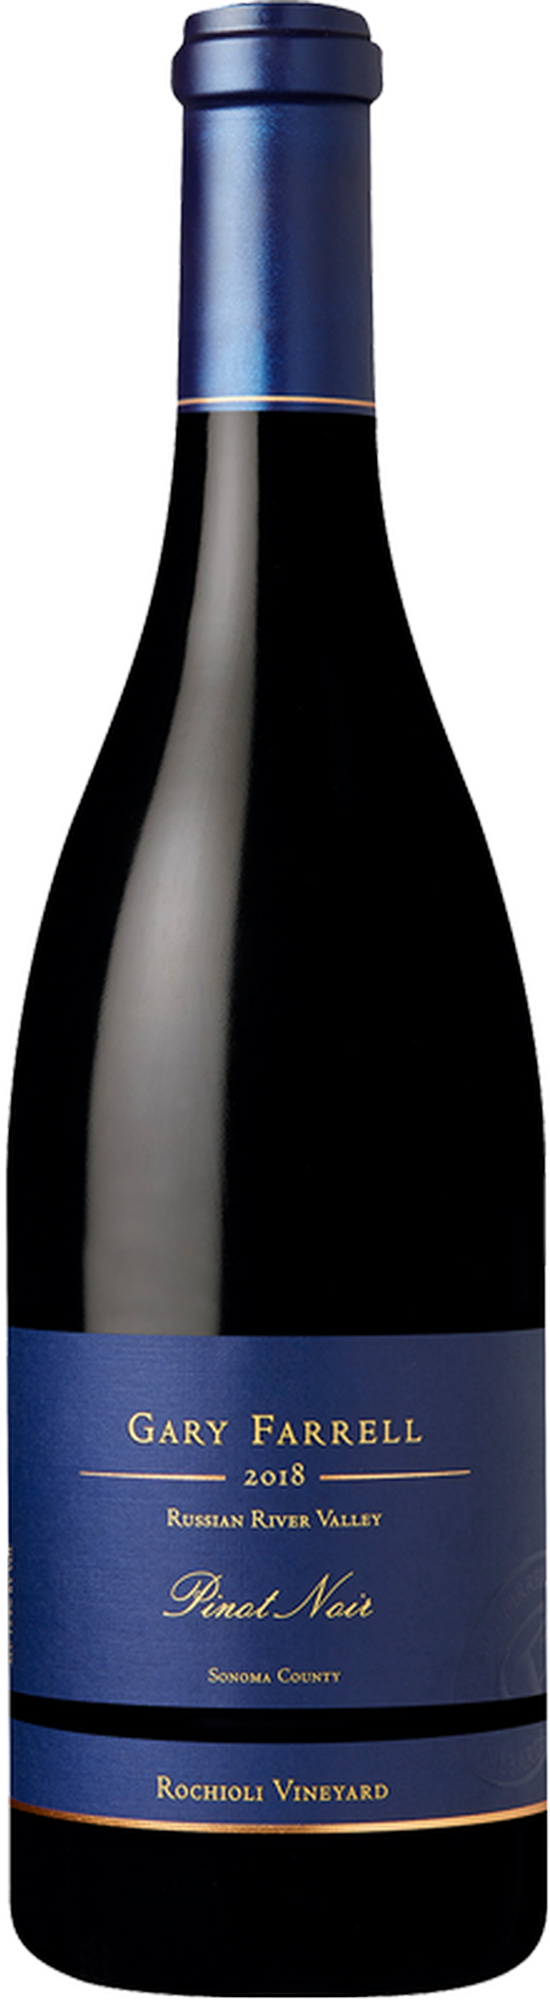 2018 Rochioli Vineyard Pinot Noir